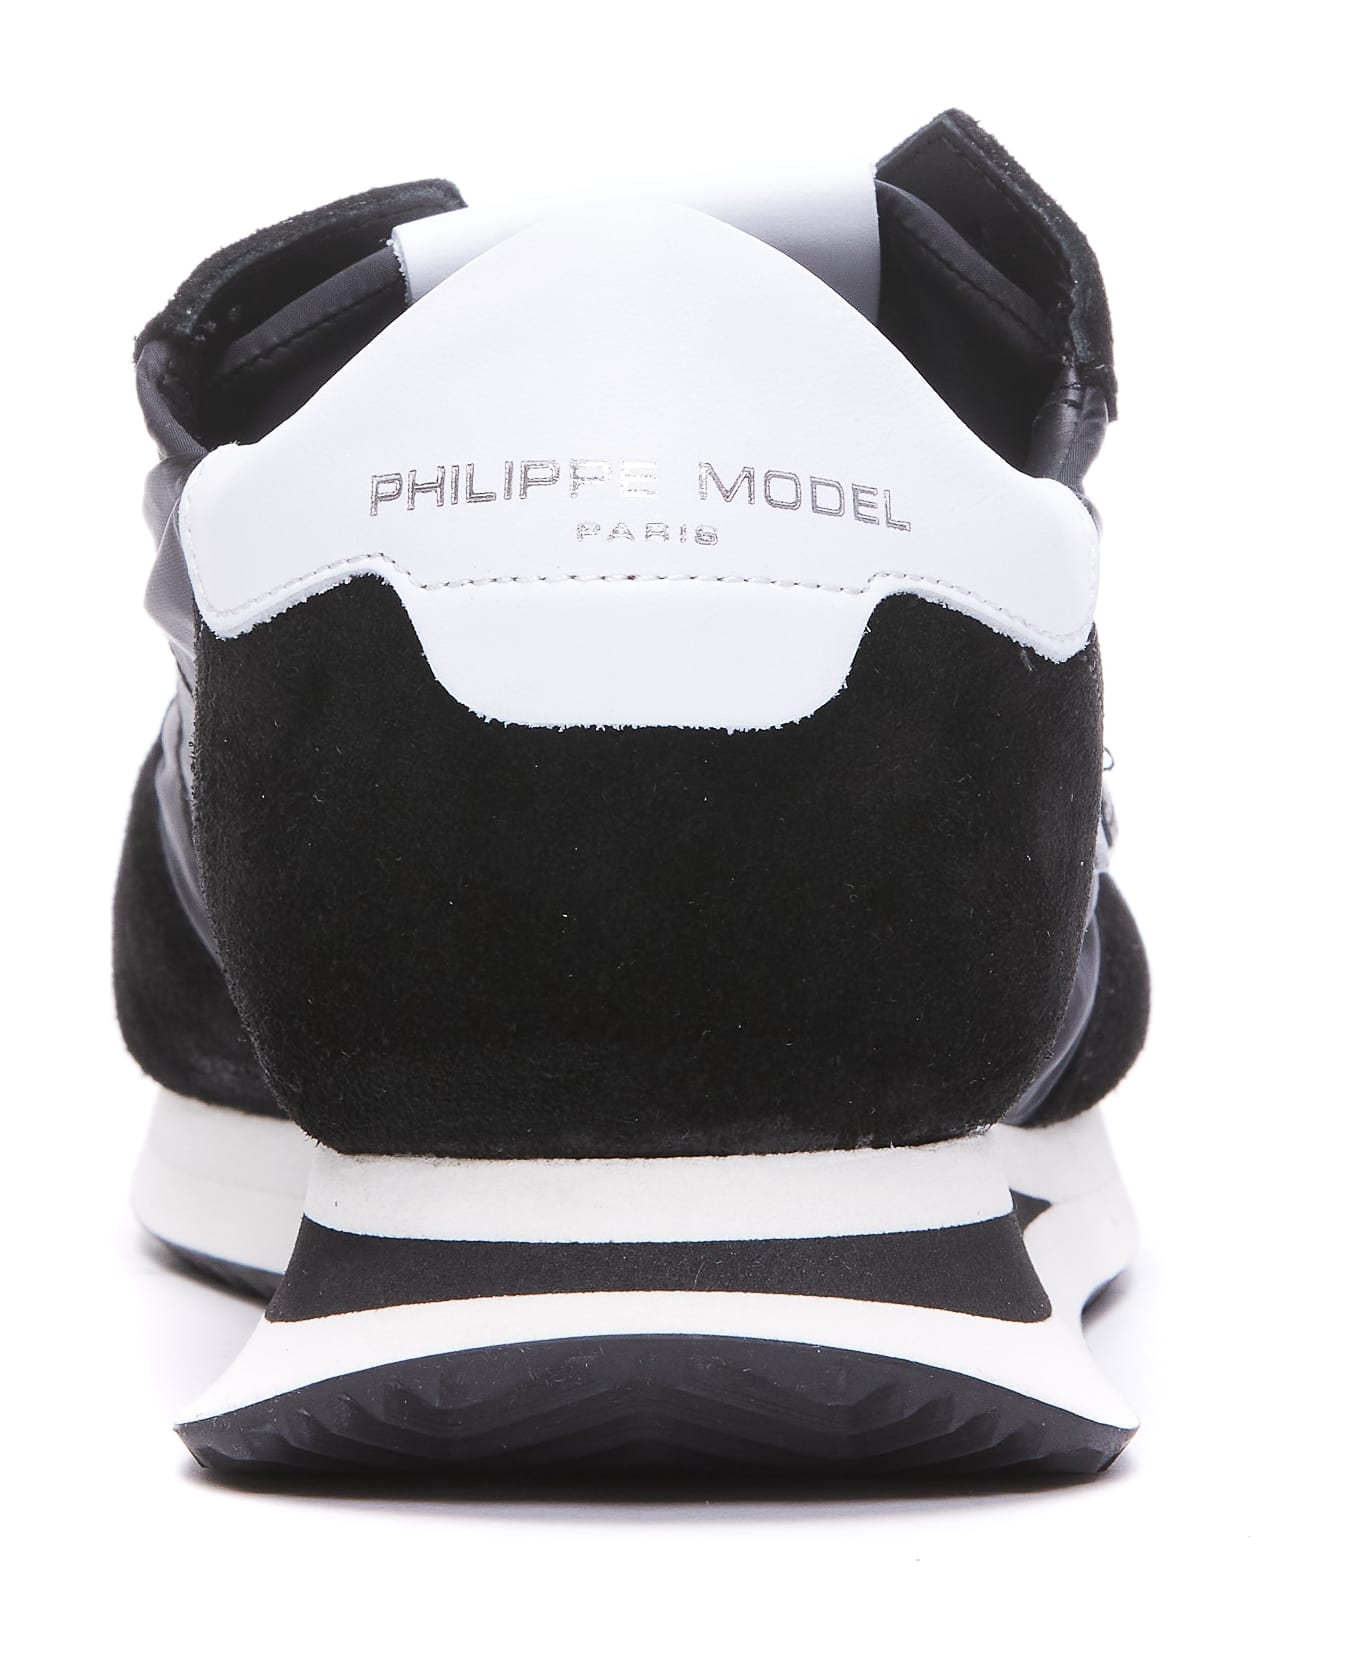 Philippe Model Trpx Sneakers - Black